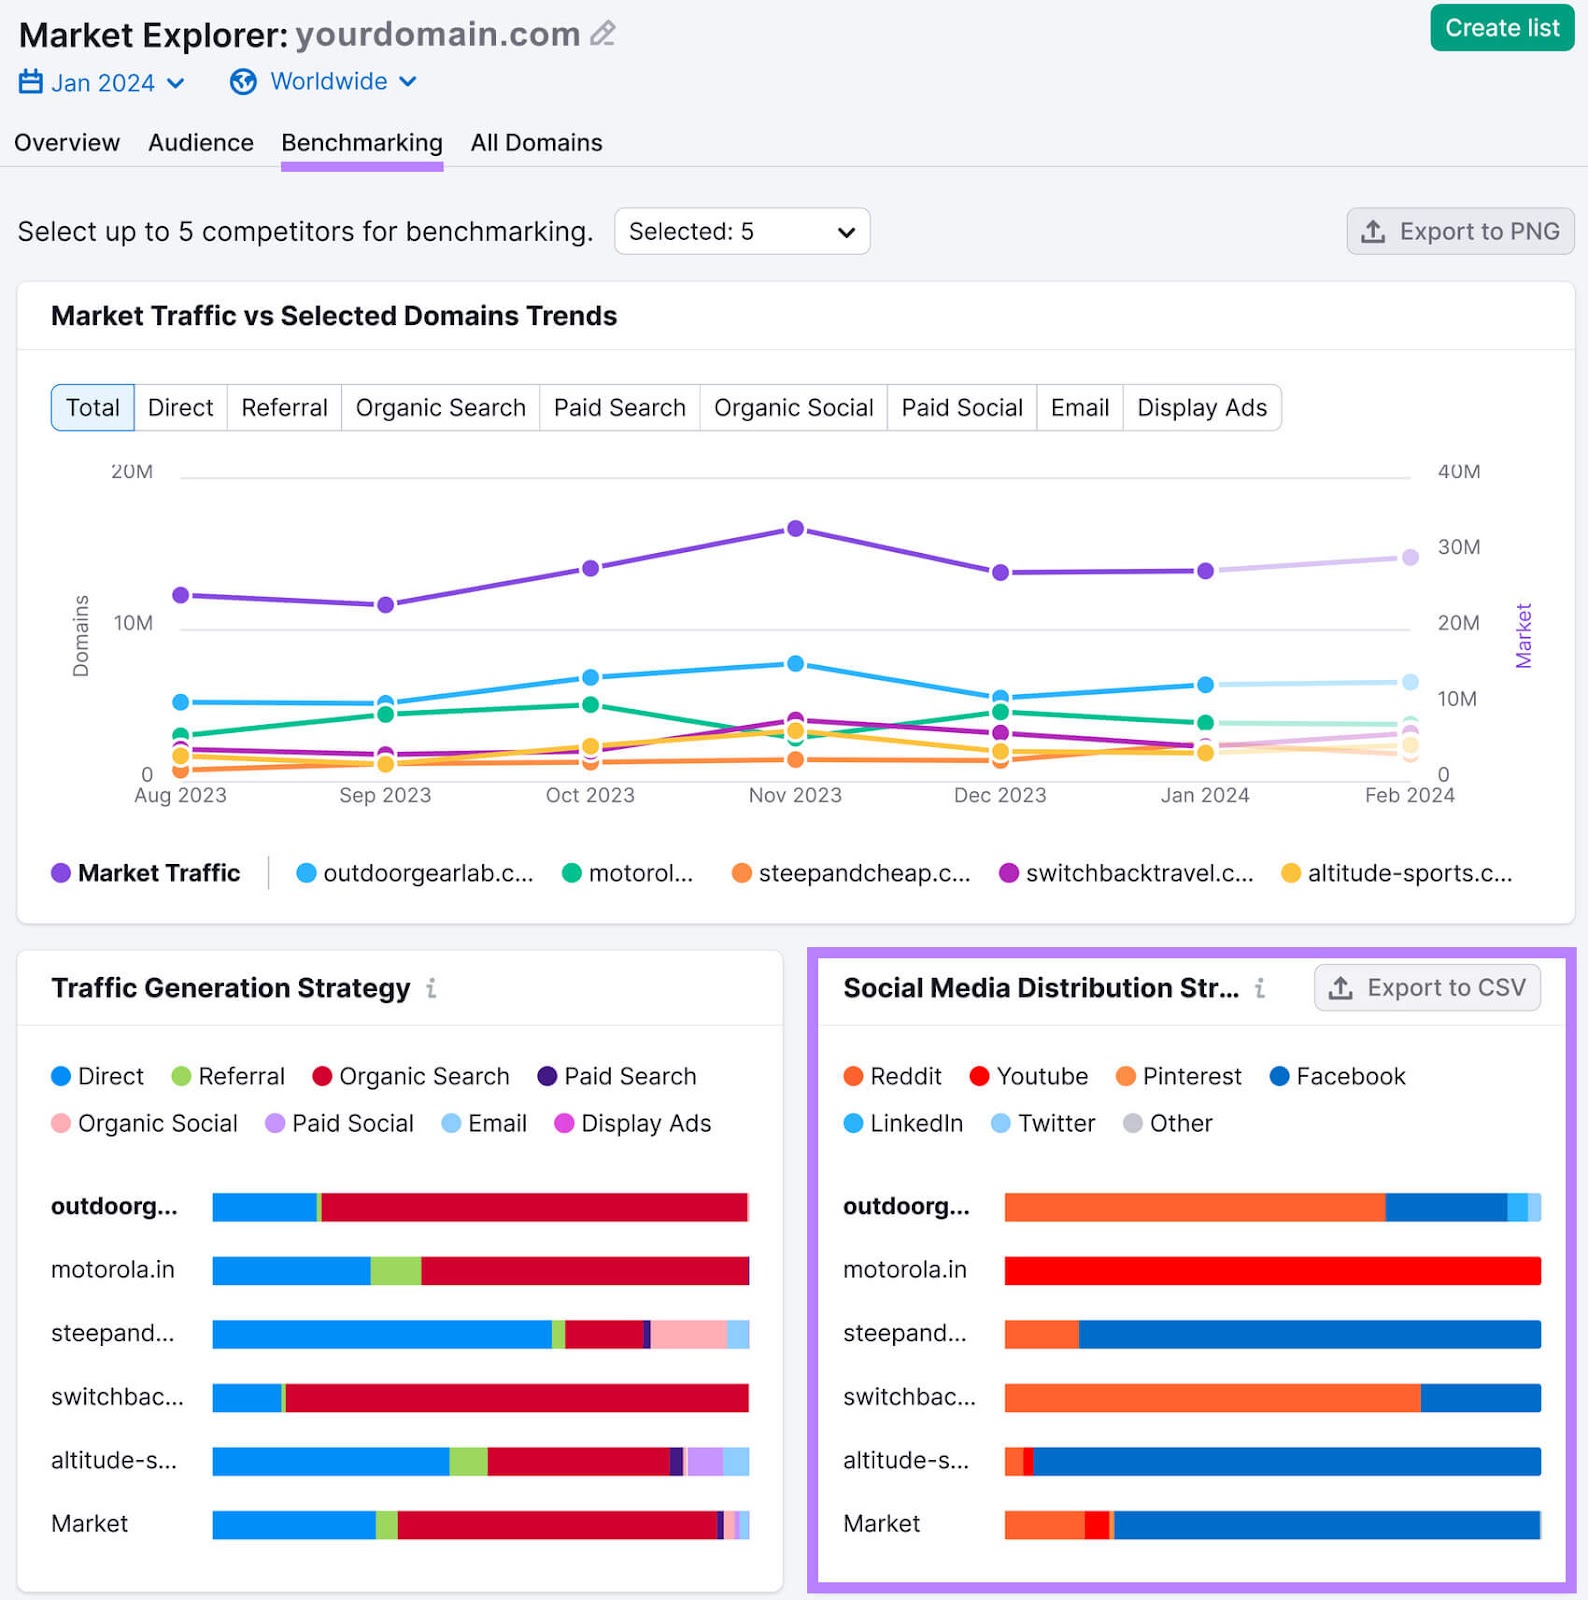 “Social Media Distribution Strategy” chart under "Benchmarking" tab in Market Explorer tool